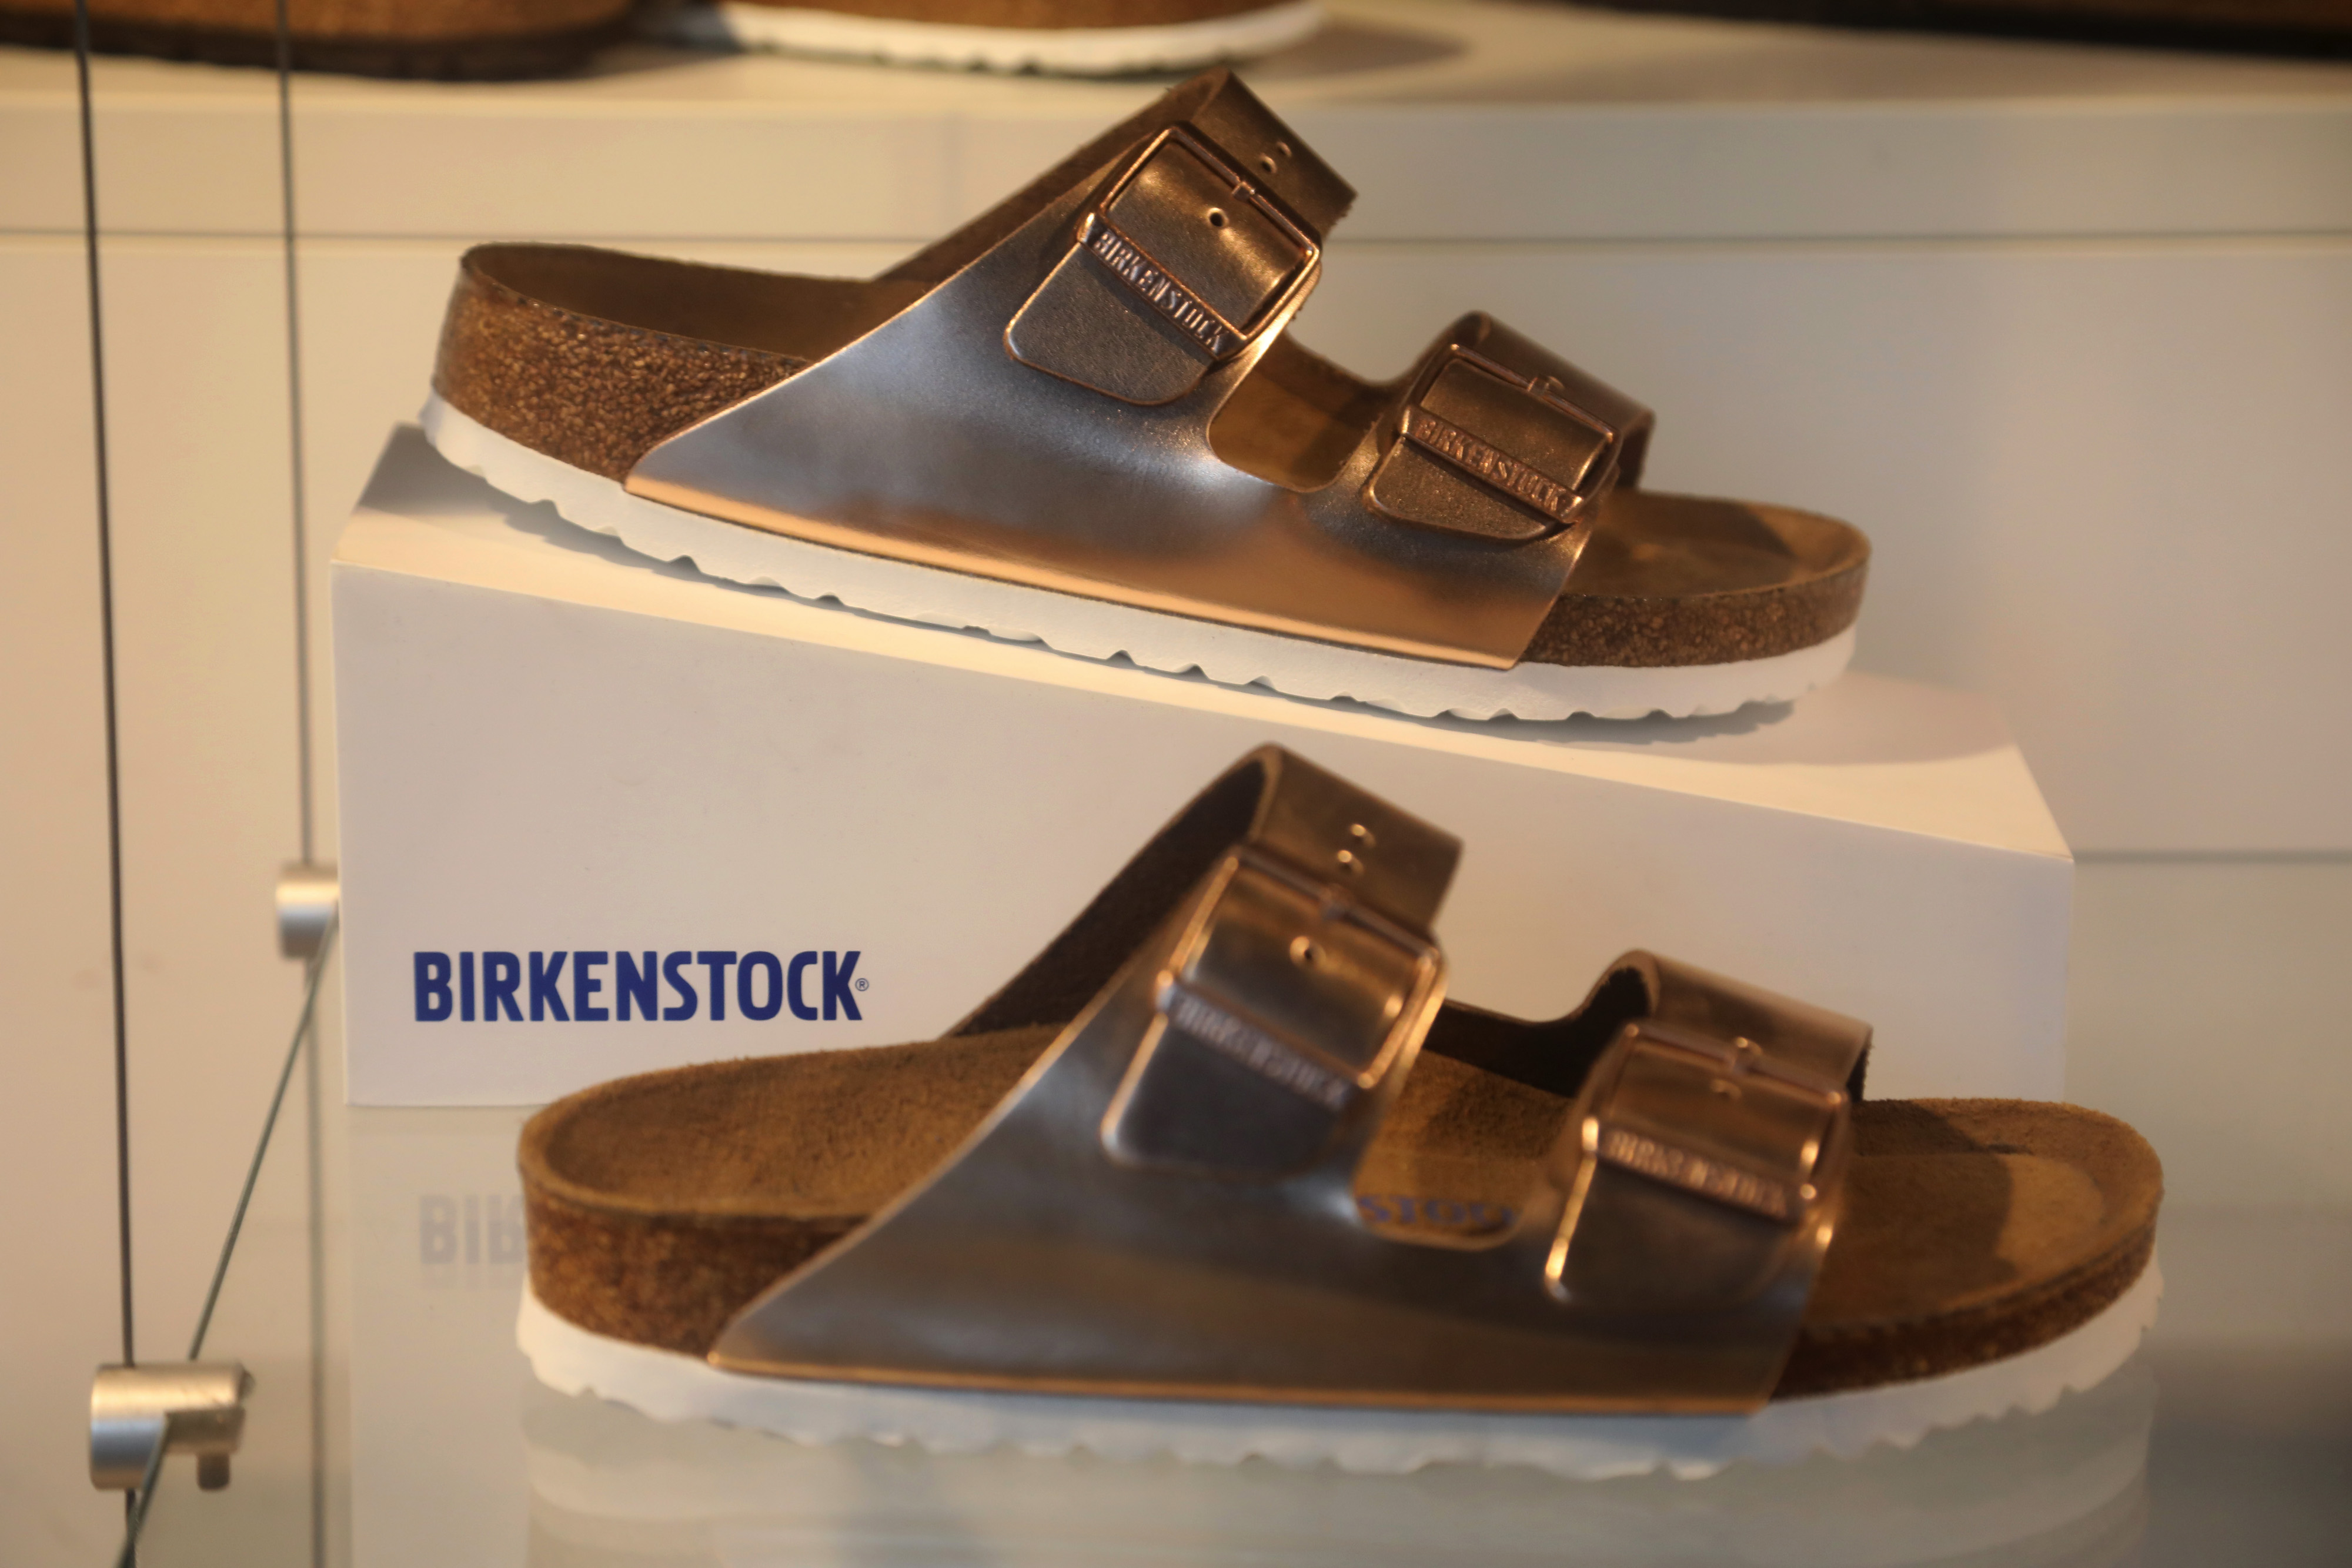 Louis Vuitton Birkenstock Collaboration Sandals